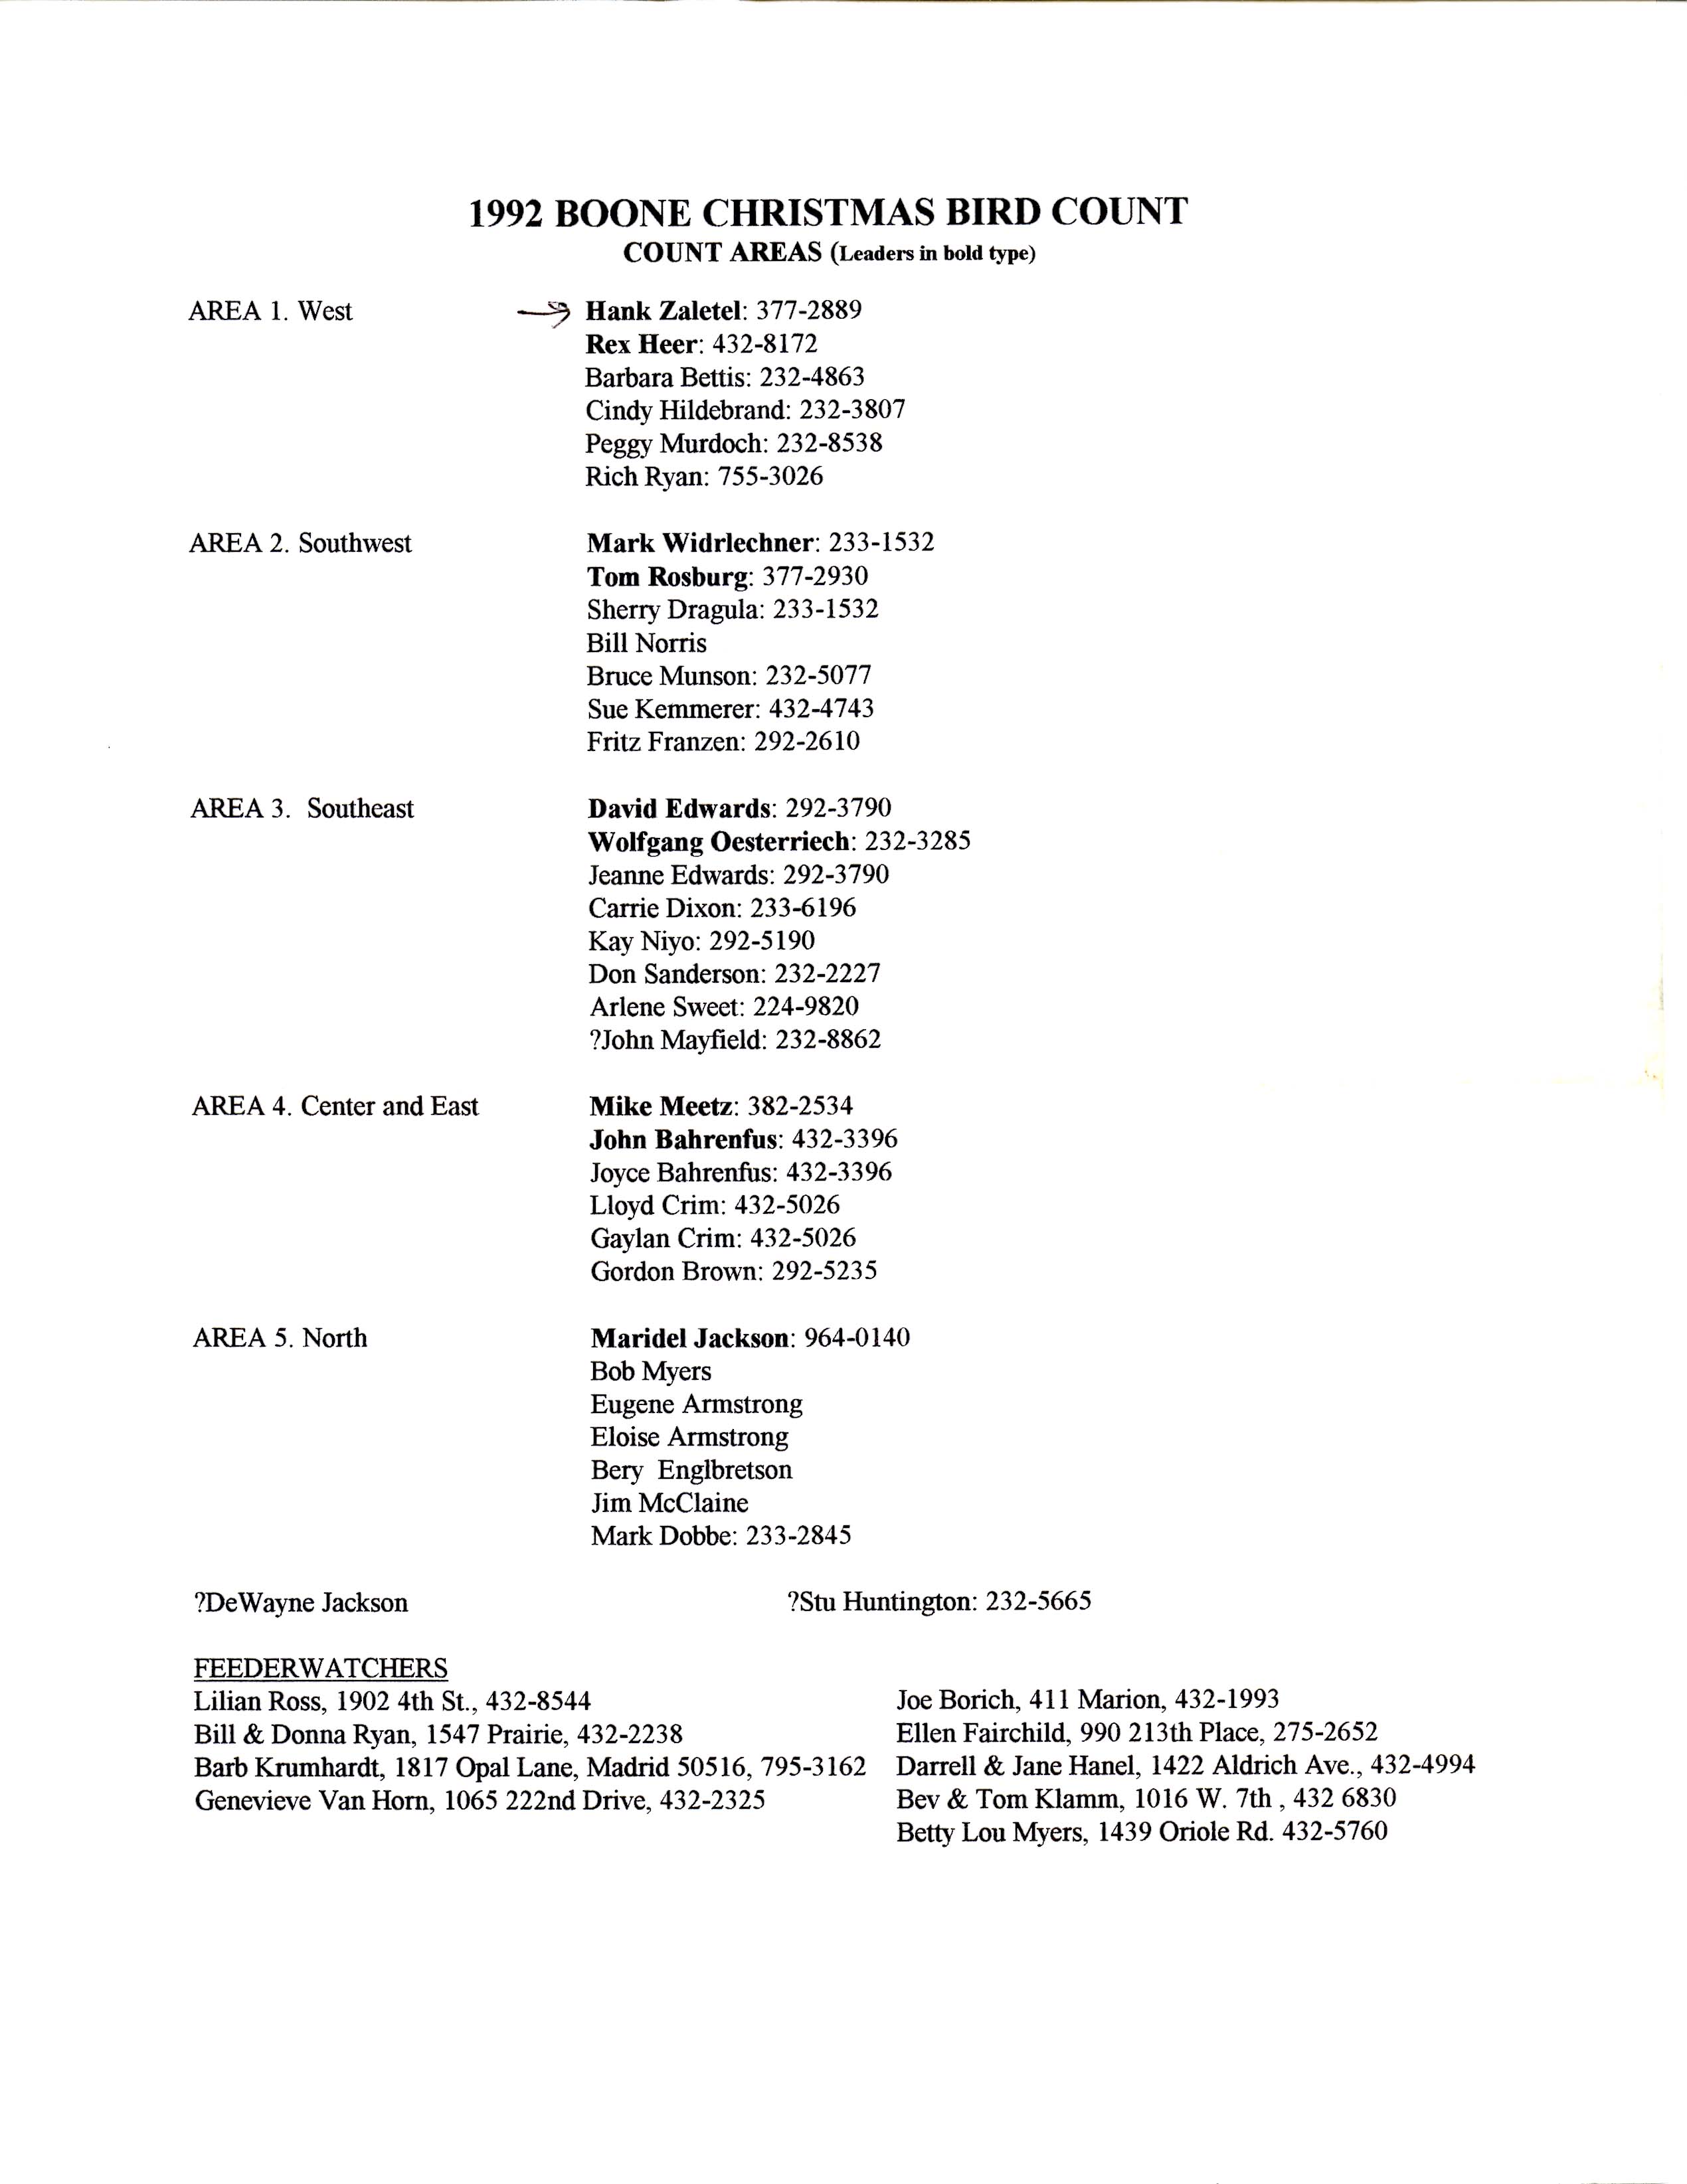 Documents regarding the 1992 Boone Christmas Bird Count 